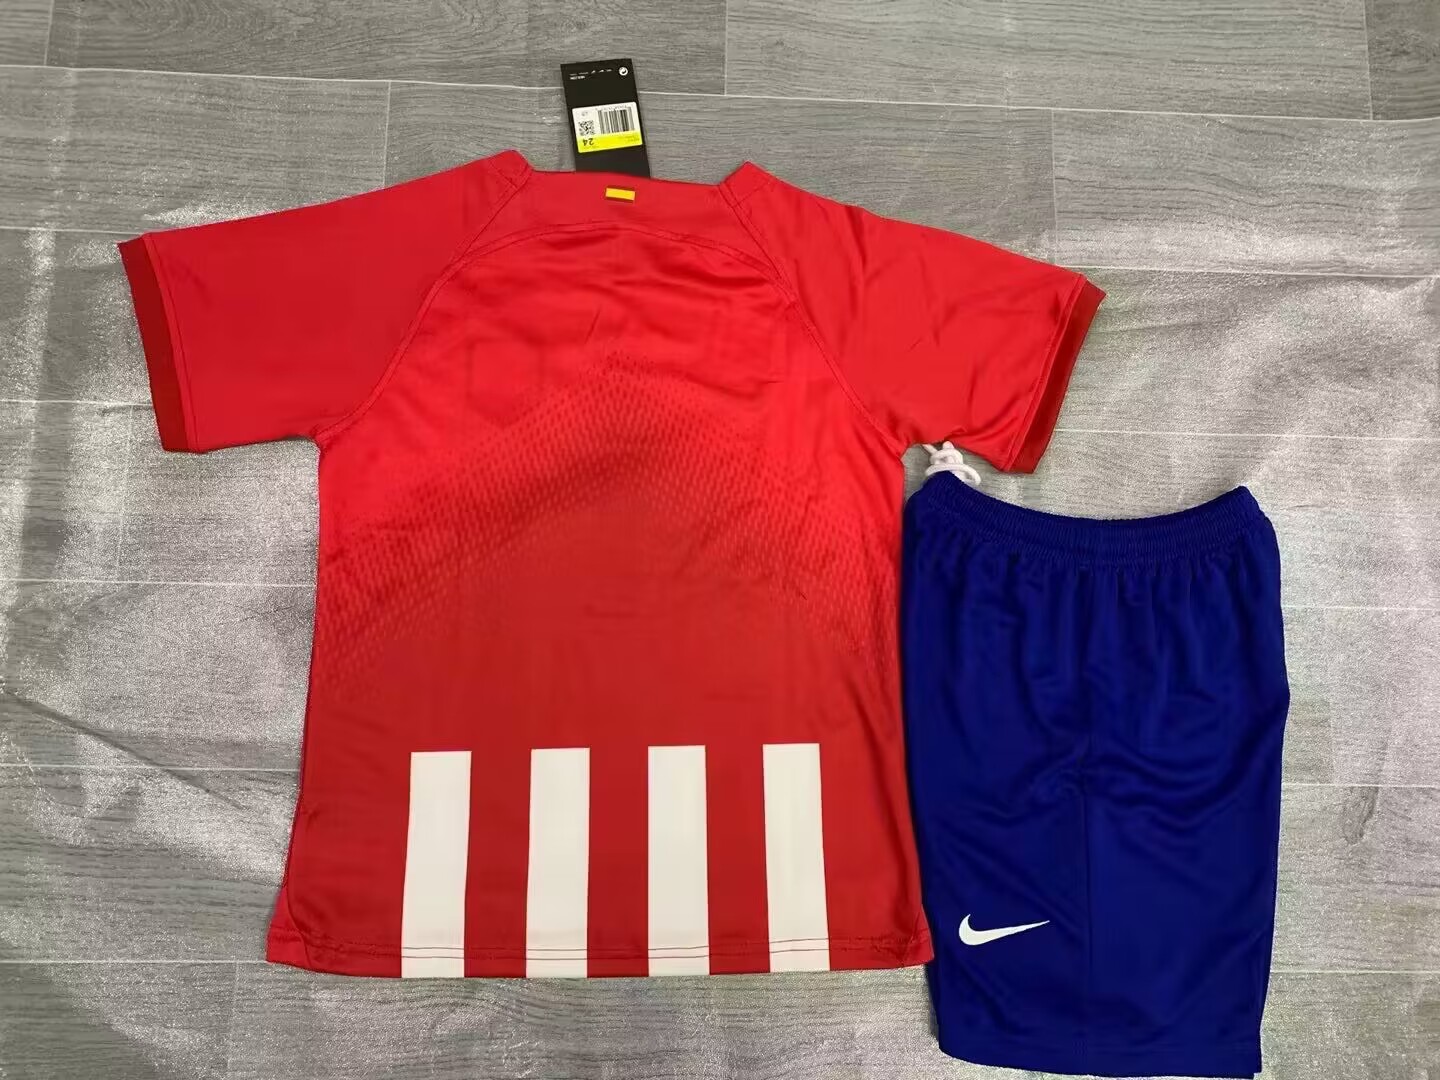 21€, Camiseta Atlético Madrid Barata 2018 2019